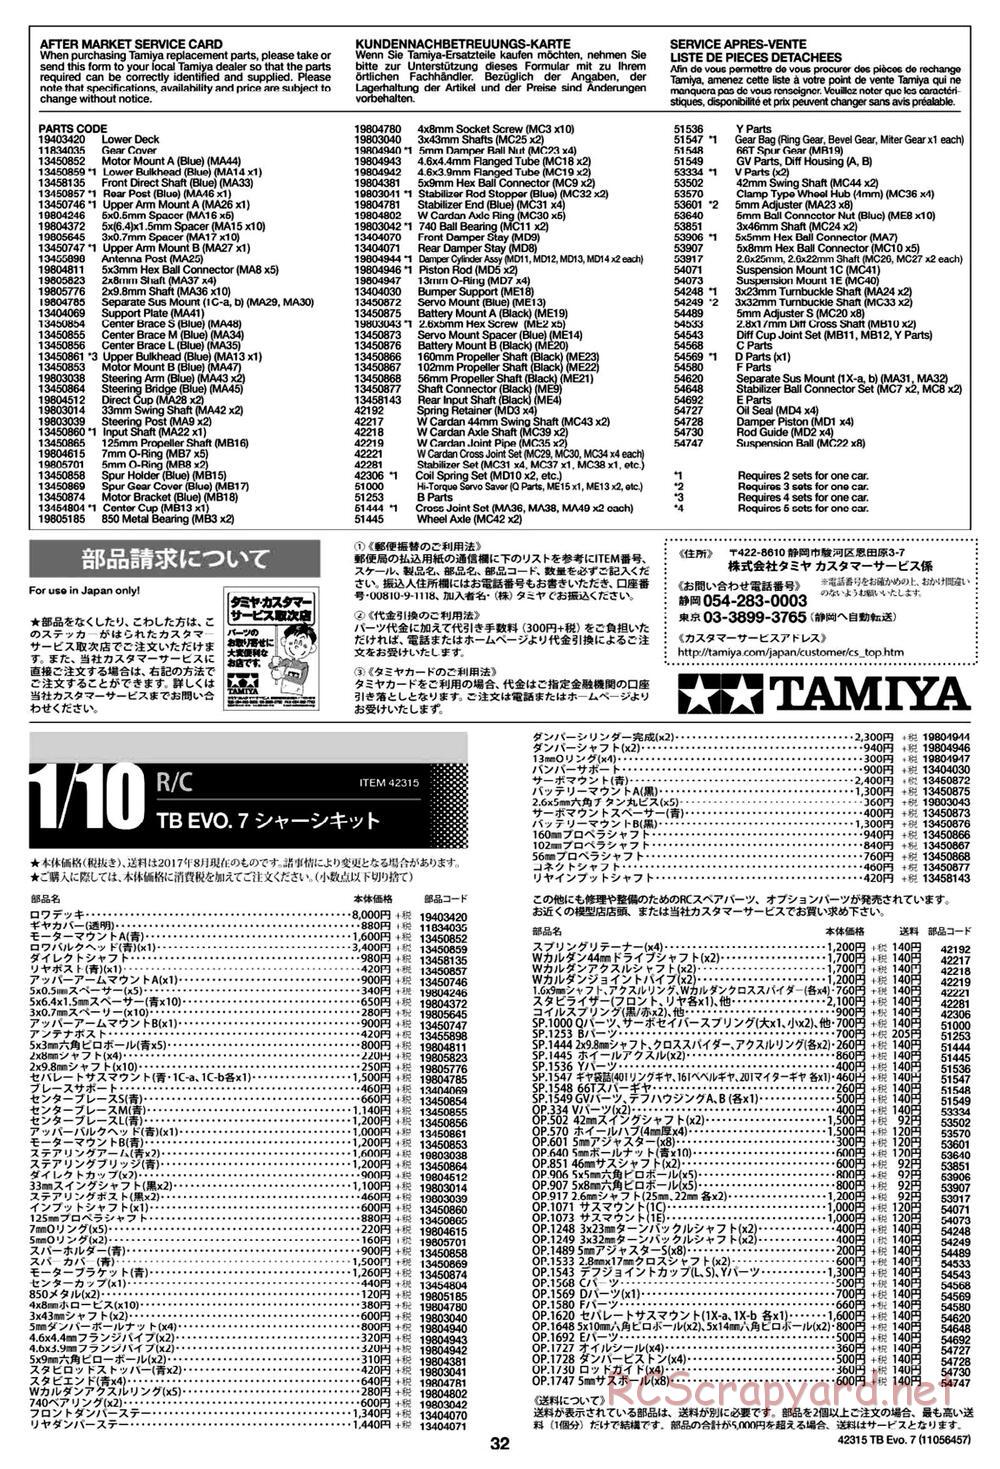 Tamiya - TB Evo.7 Chassis - Manual - Page 32